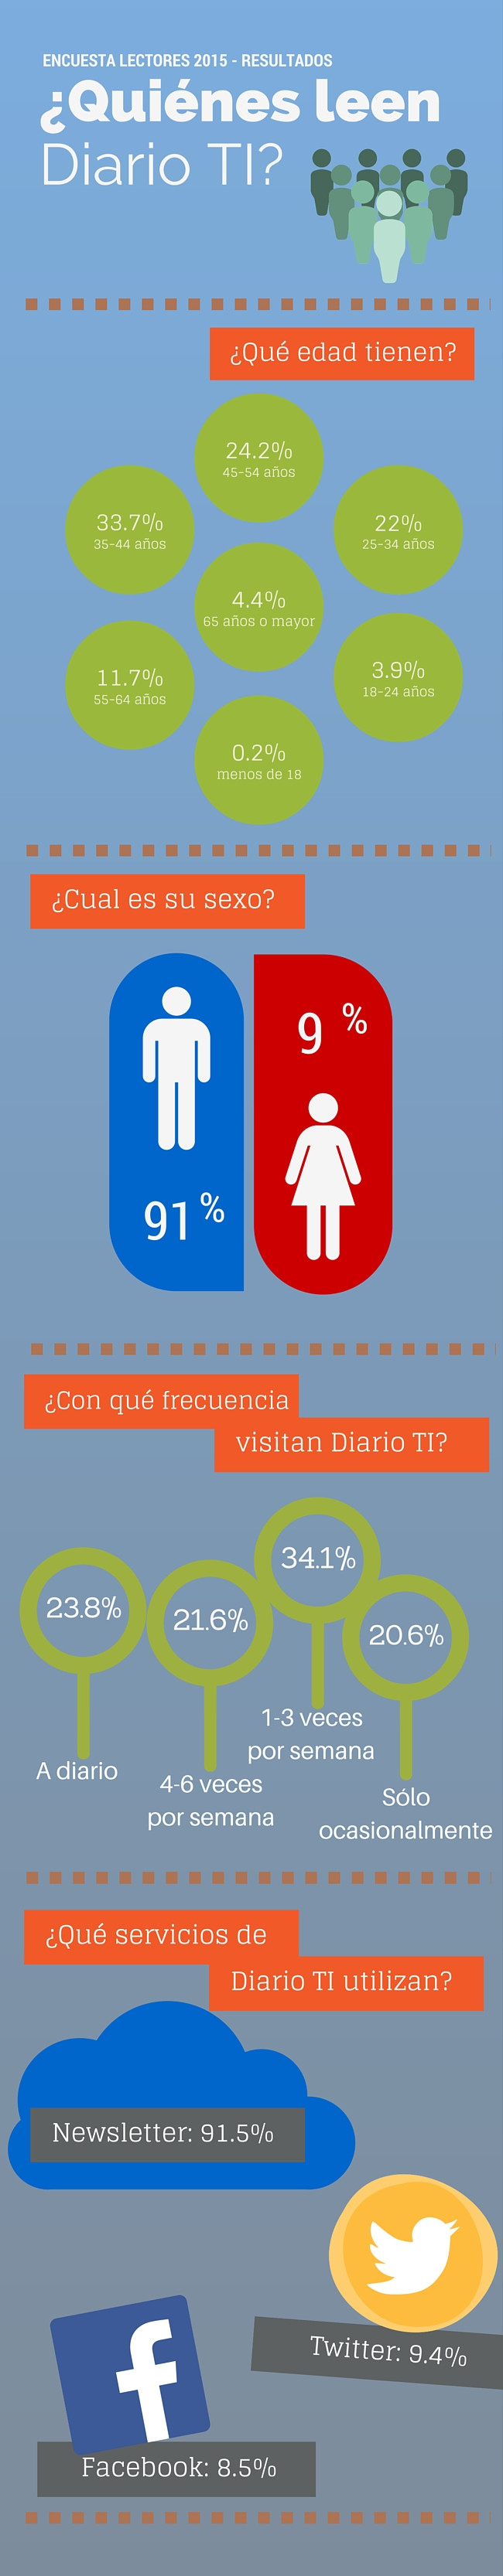 Infografía encuesta lectores Diario TI - 1